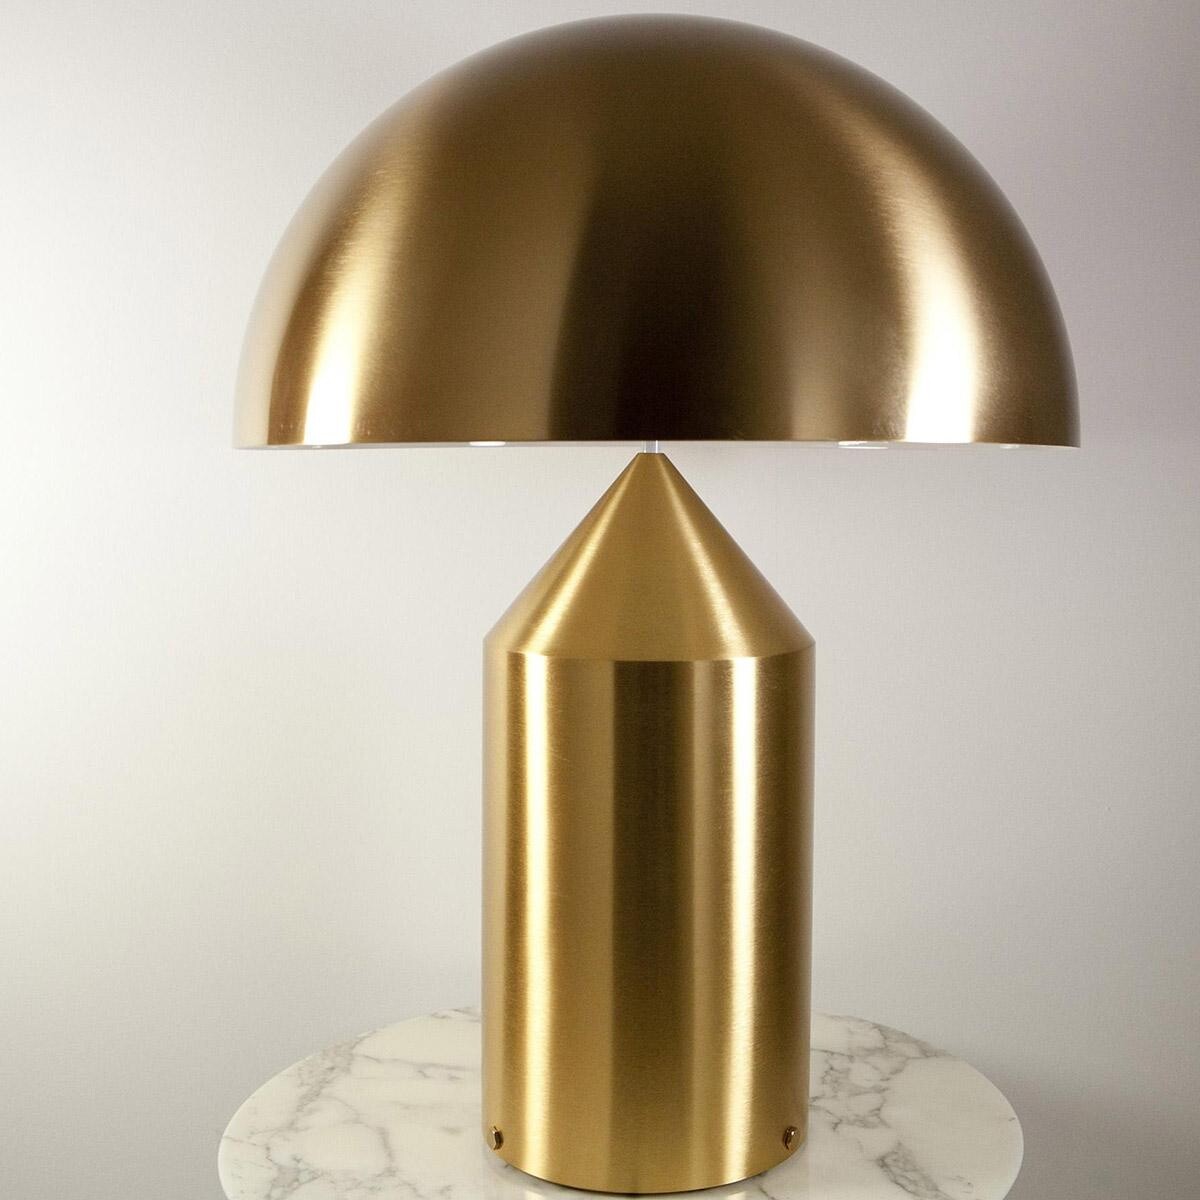 Oluce Atollo Table Lamp Gold, Table Lamp Dimmer Socket